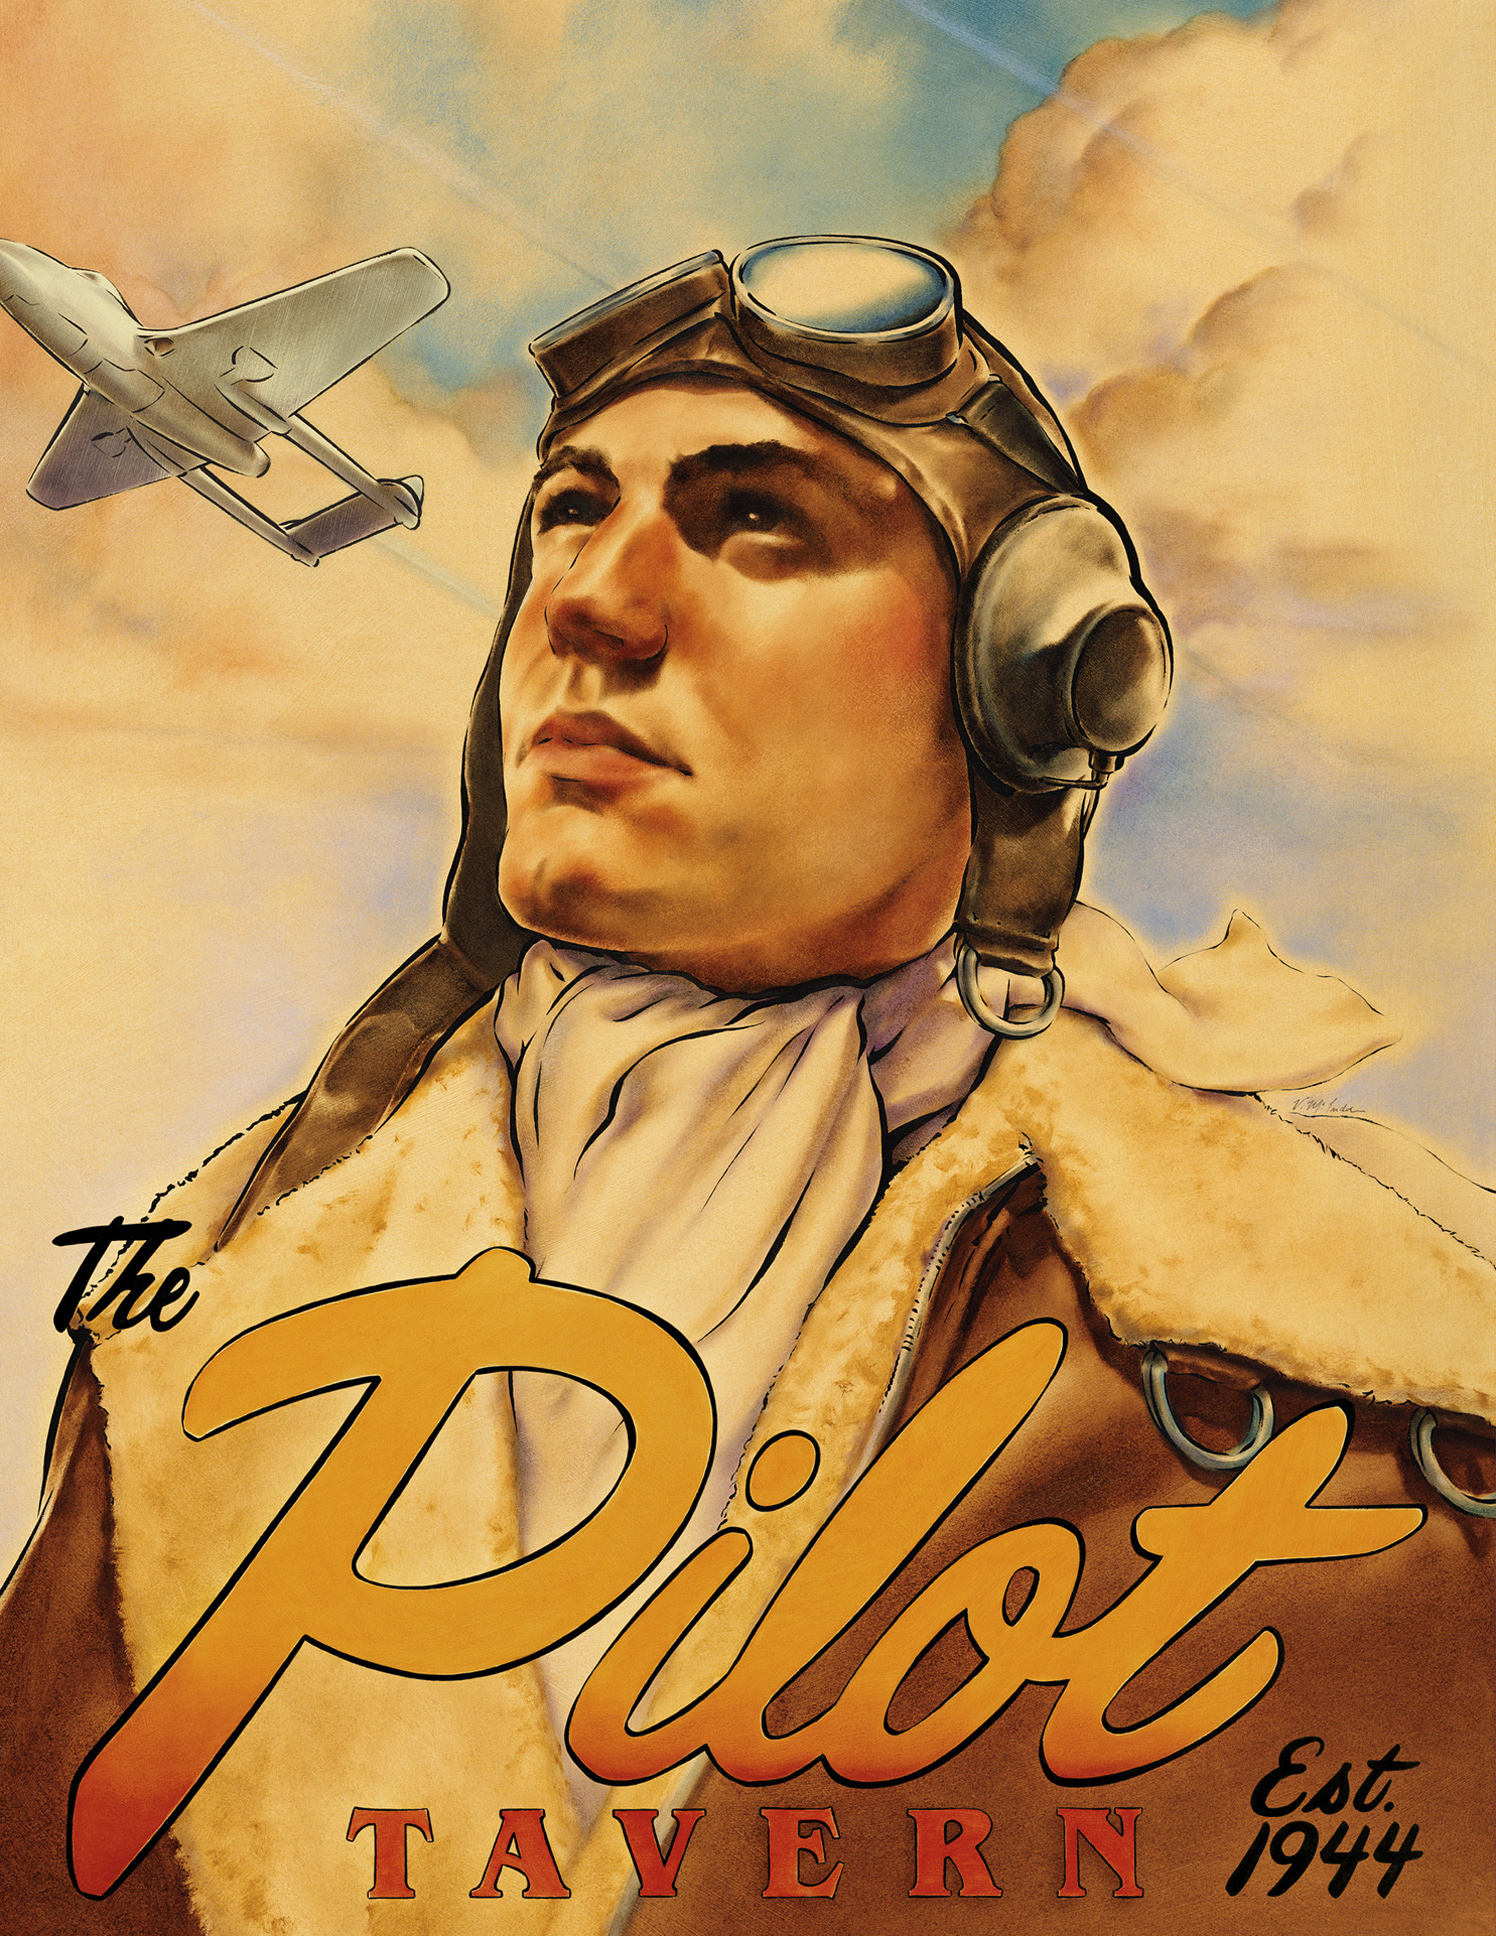 The Pilot Tavern